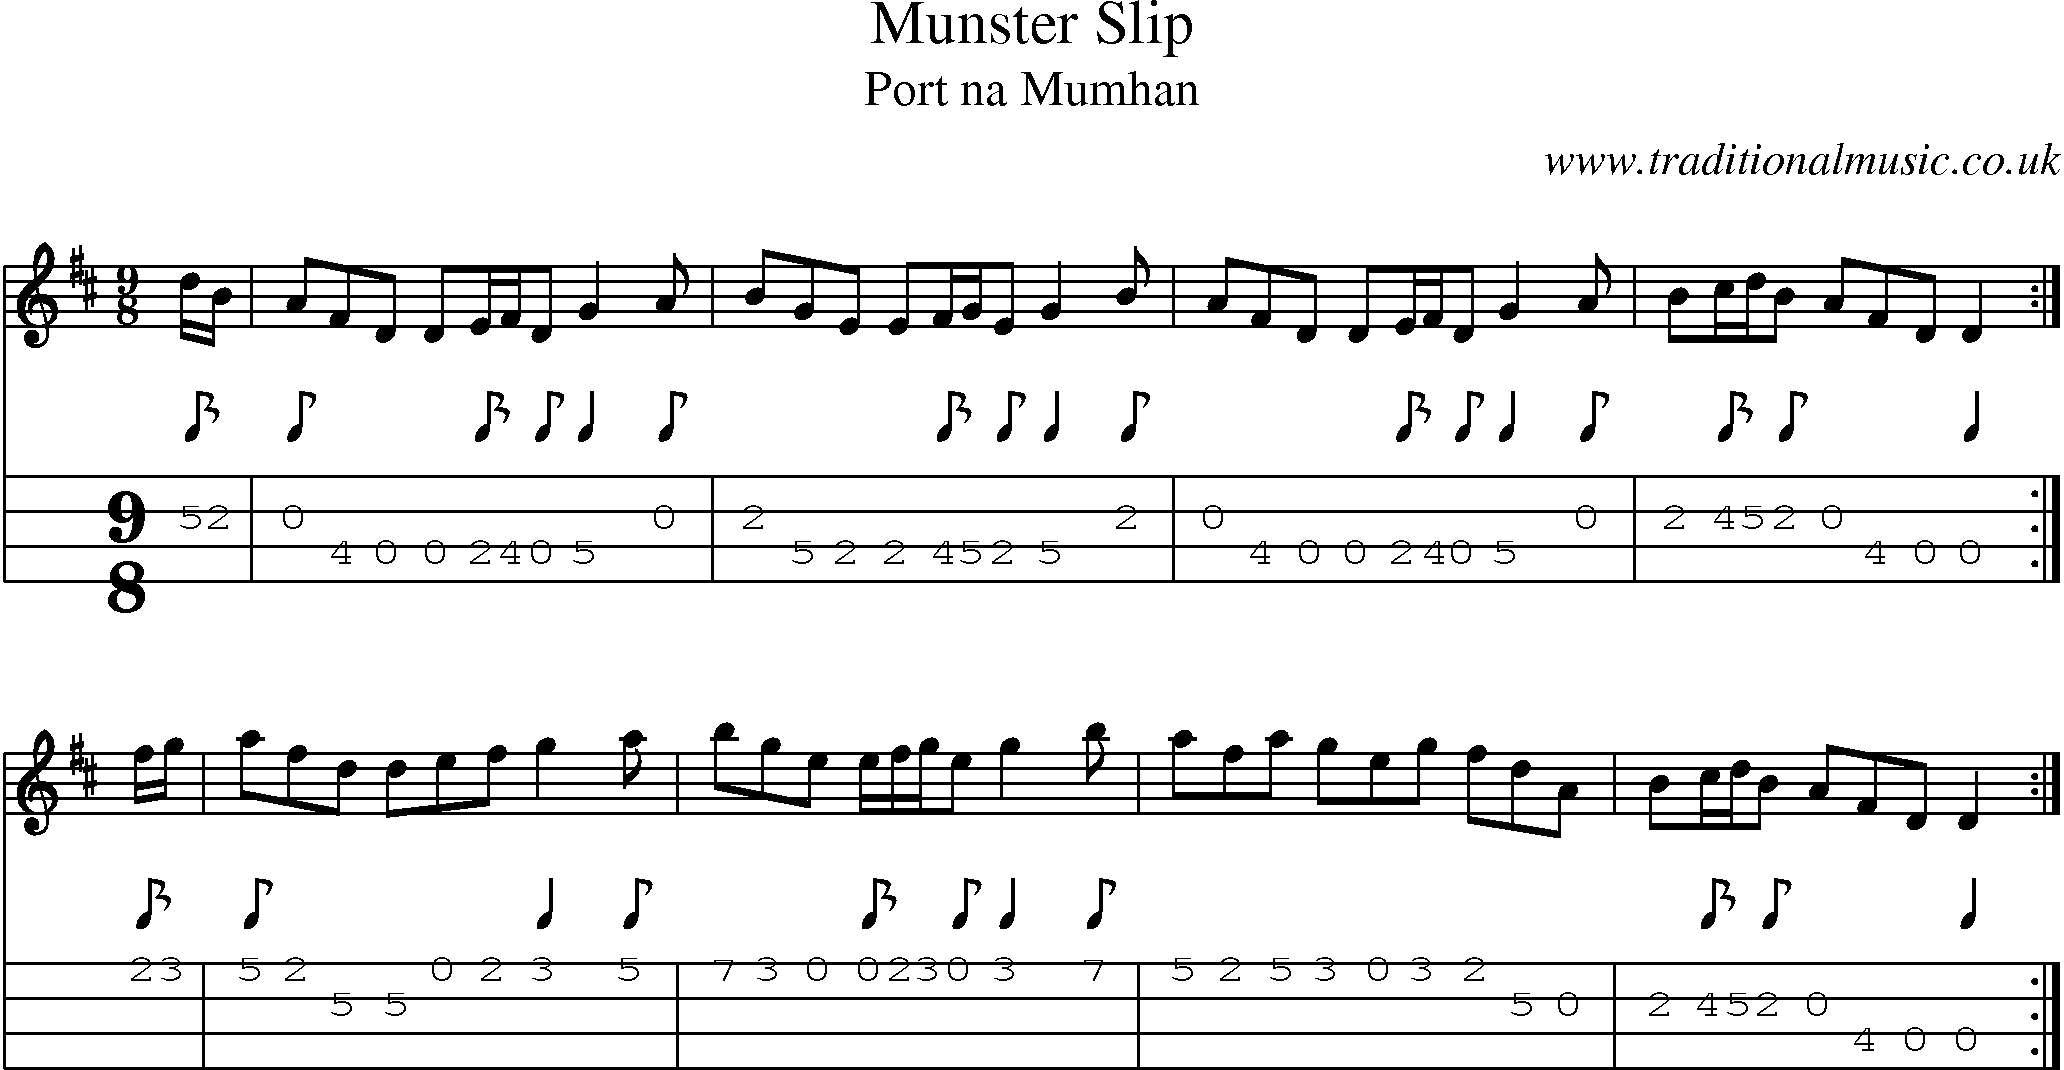 Music Score and Mandolin Tabs for Munster Slip